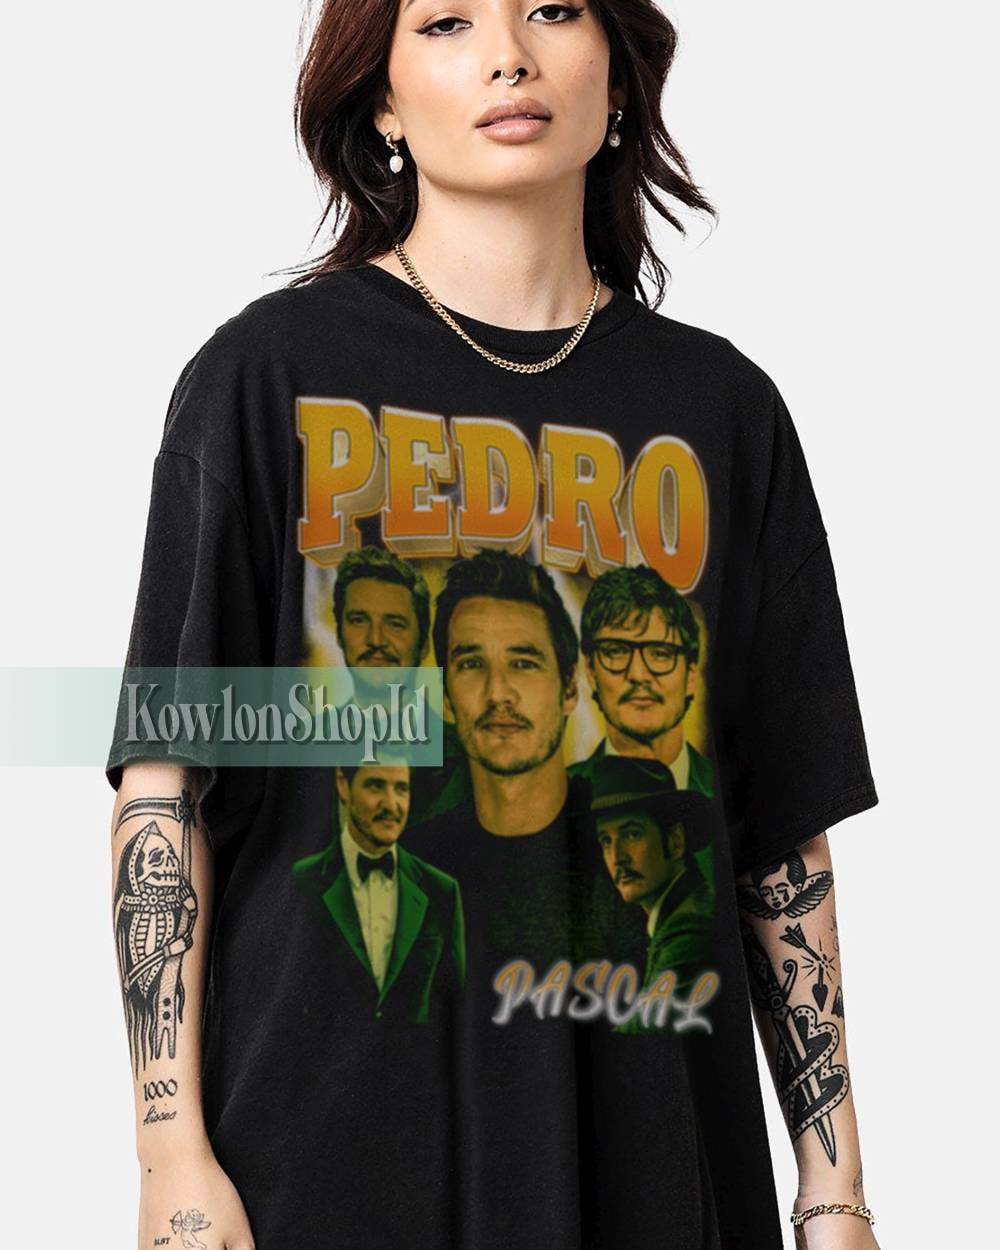 Discover PEDRO PASCAL Shirt, Actor Pedro Pascal Shirt Retro 90s, Narco Pedro Pascal Fans Gift